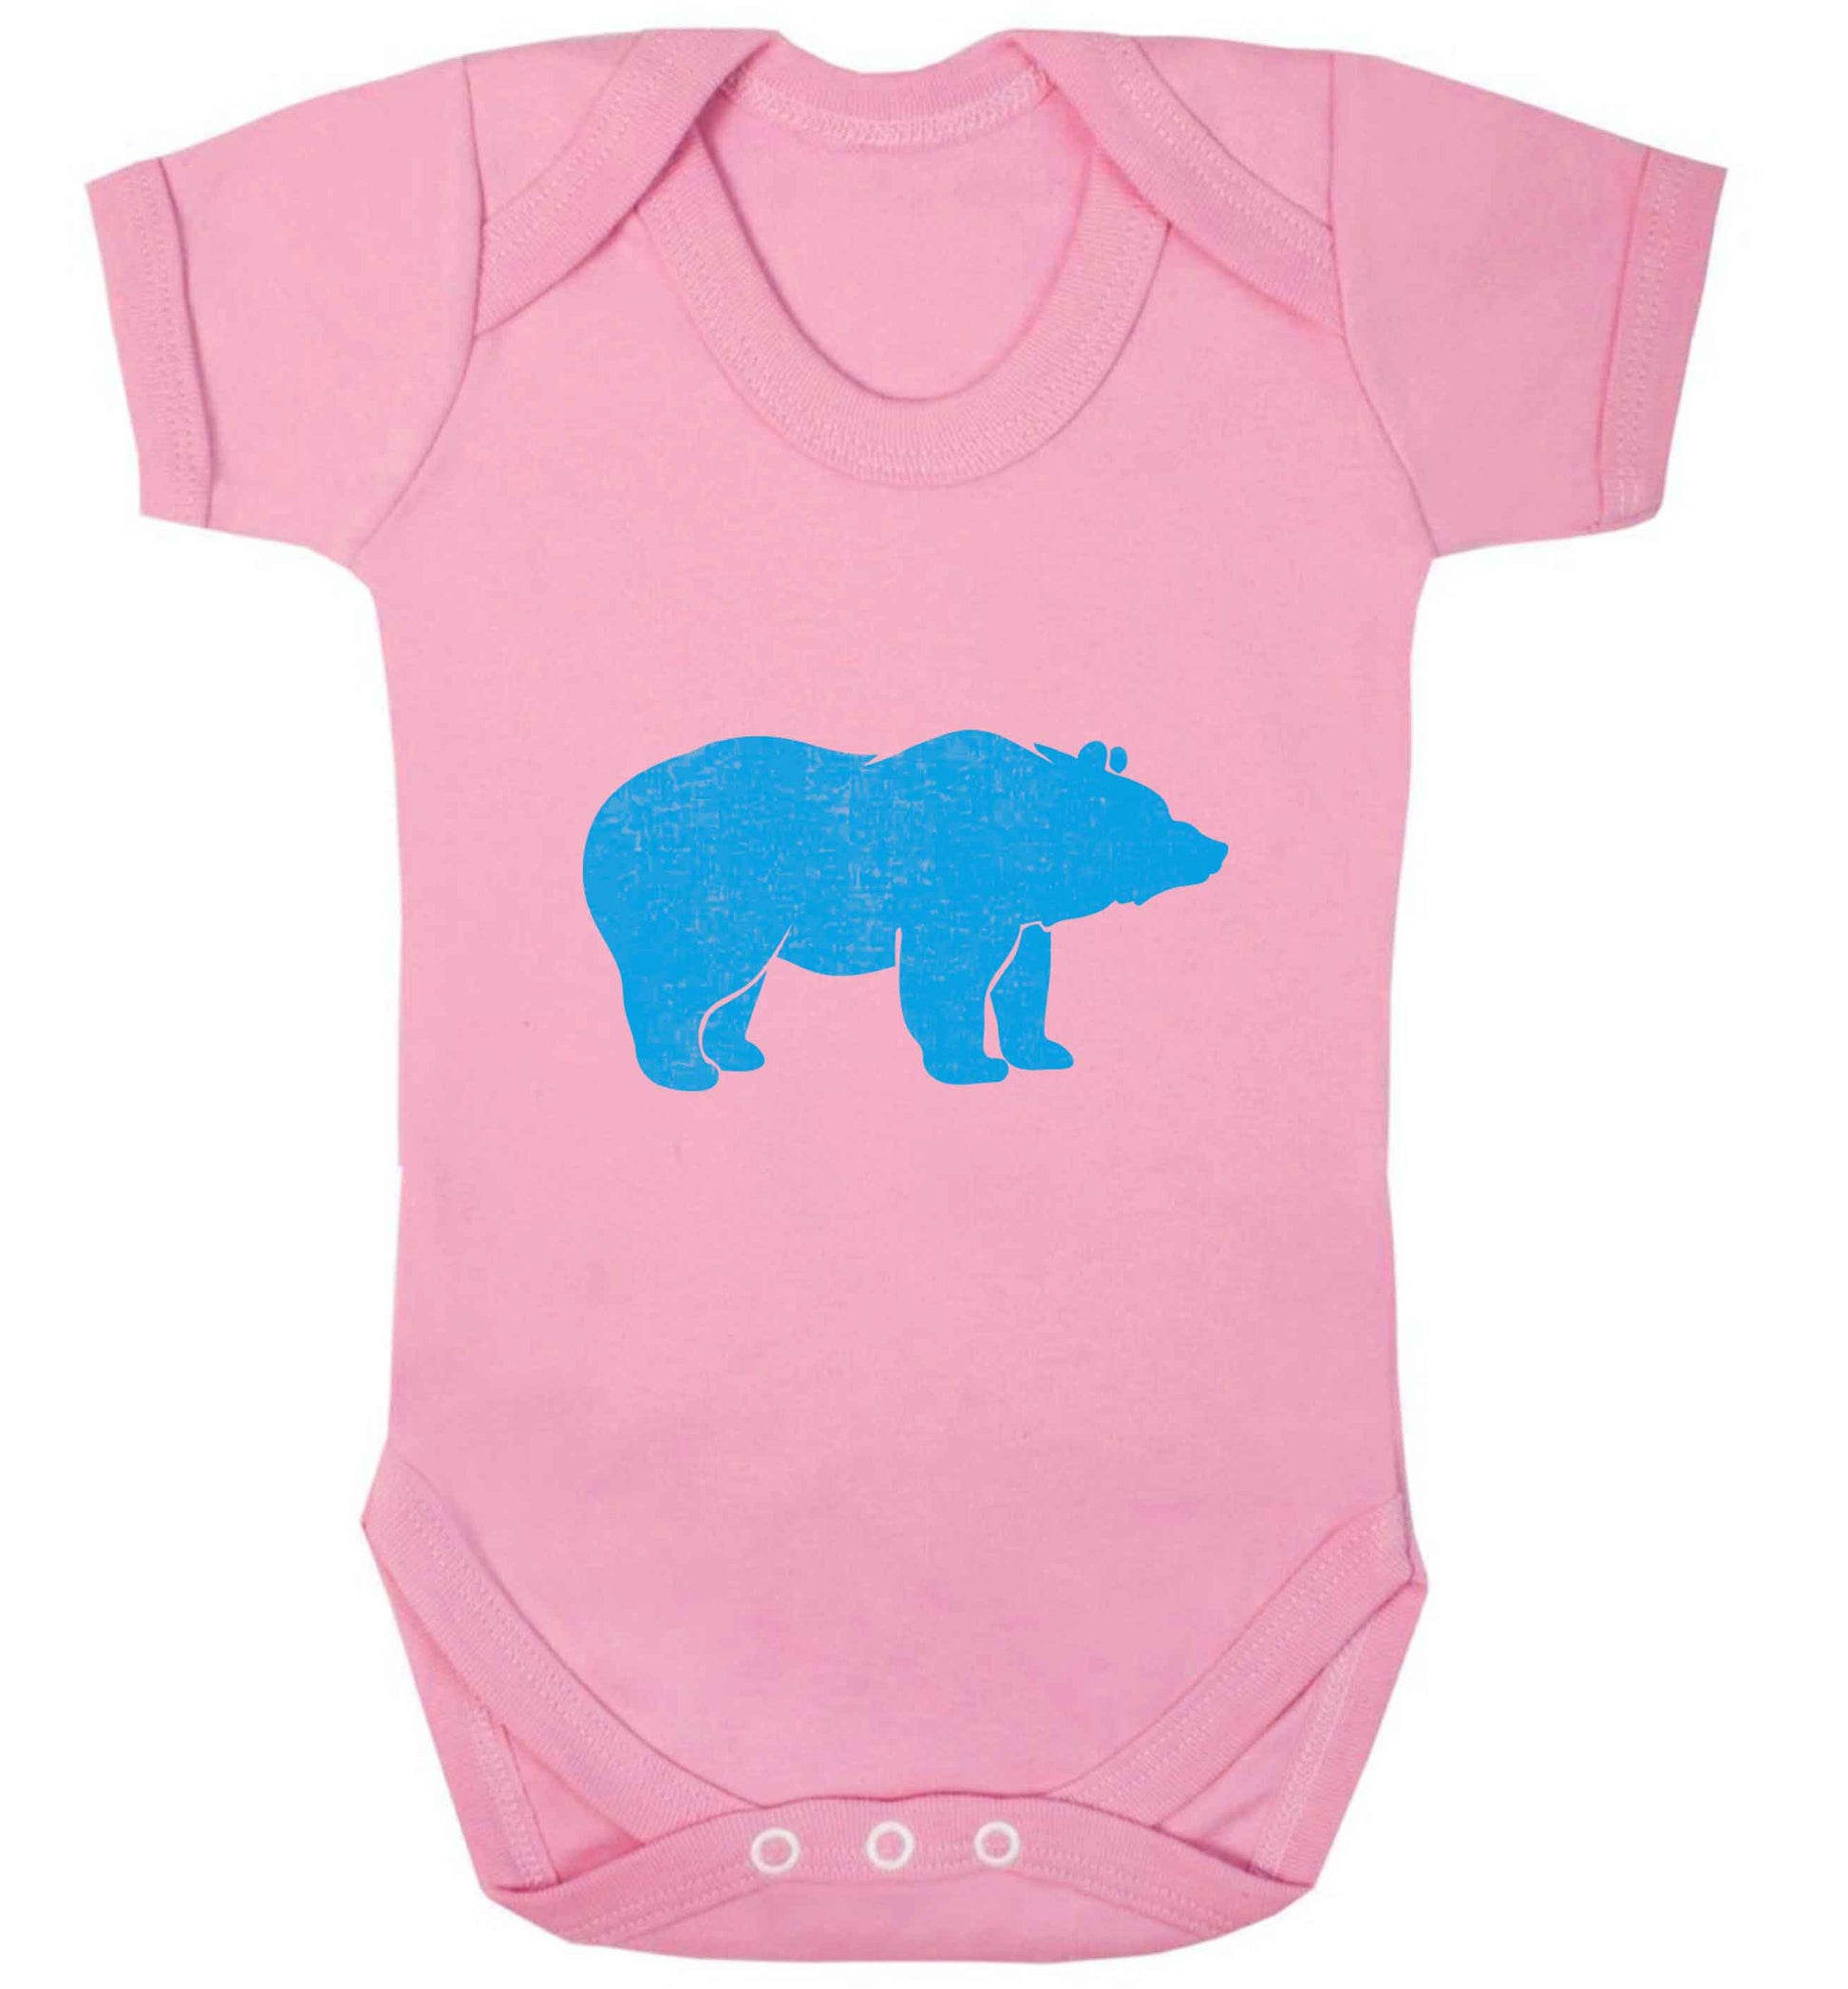 Blue bear baby vest pale pink 18-24 months